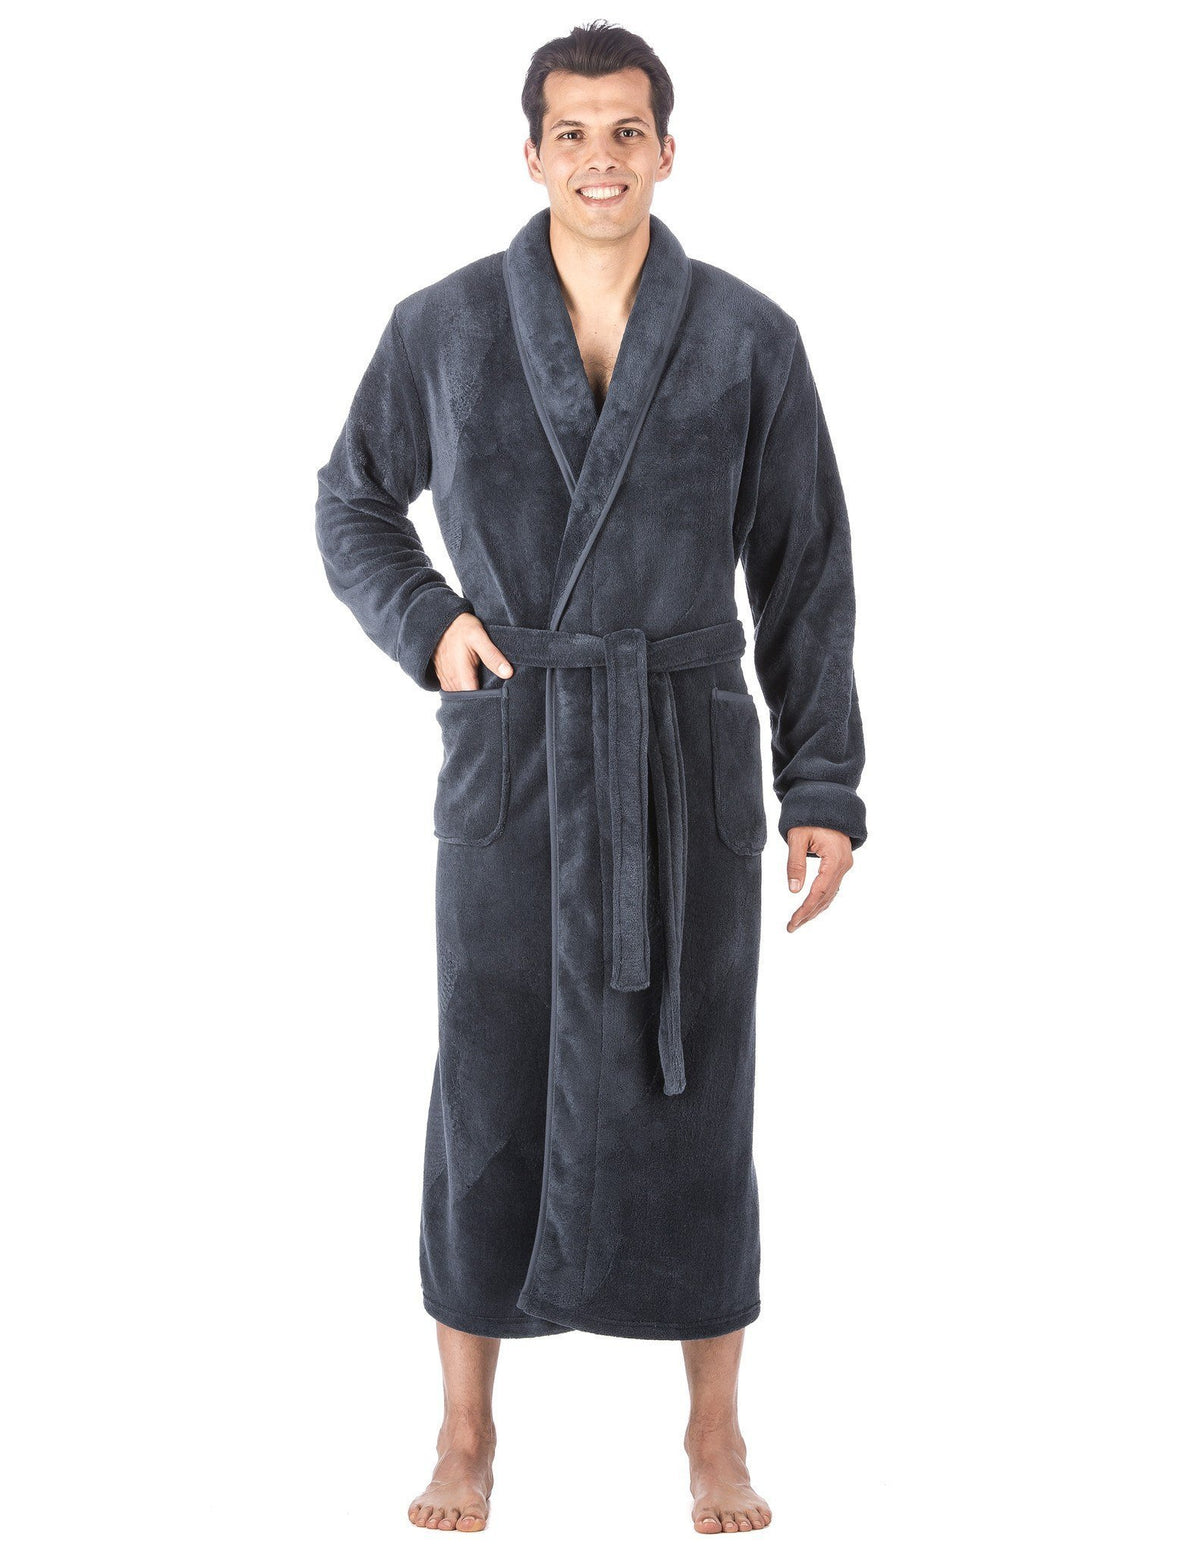 Men's Premium Coral Fleece Full Length Plush Spa/Bath Robe - Navy